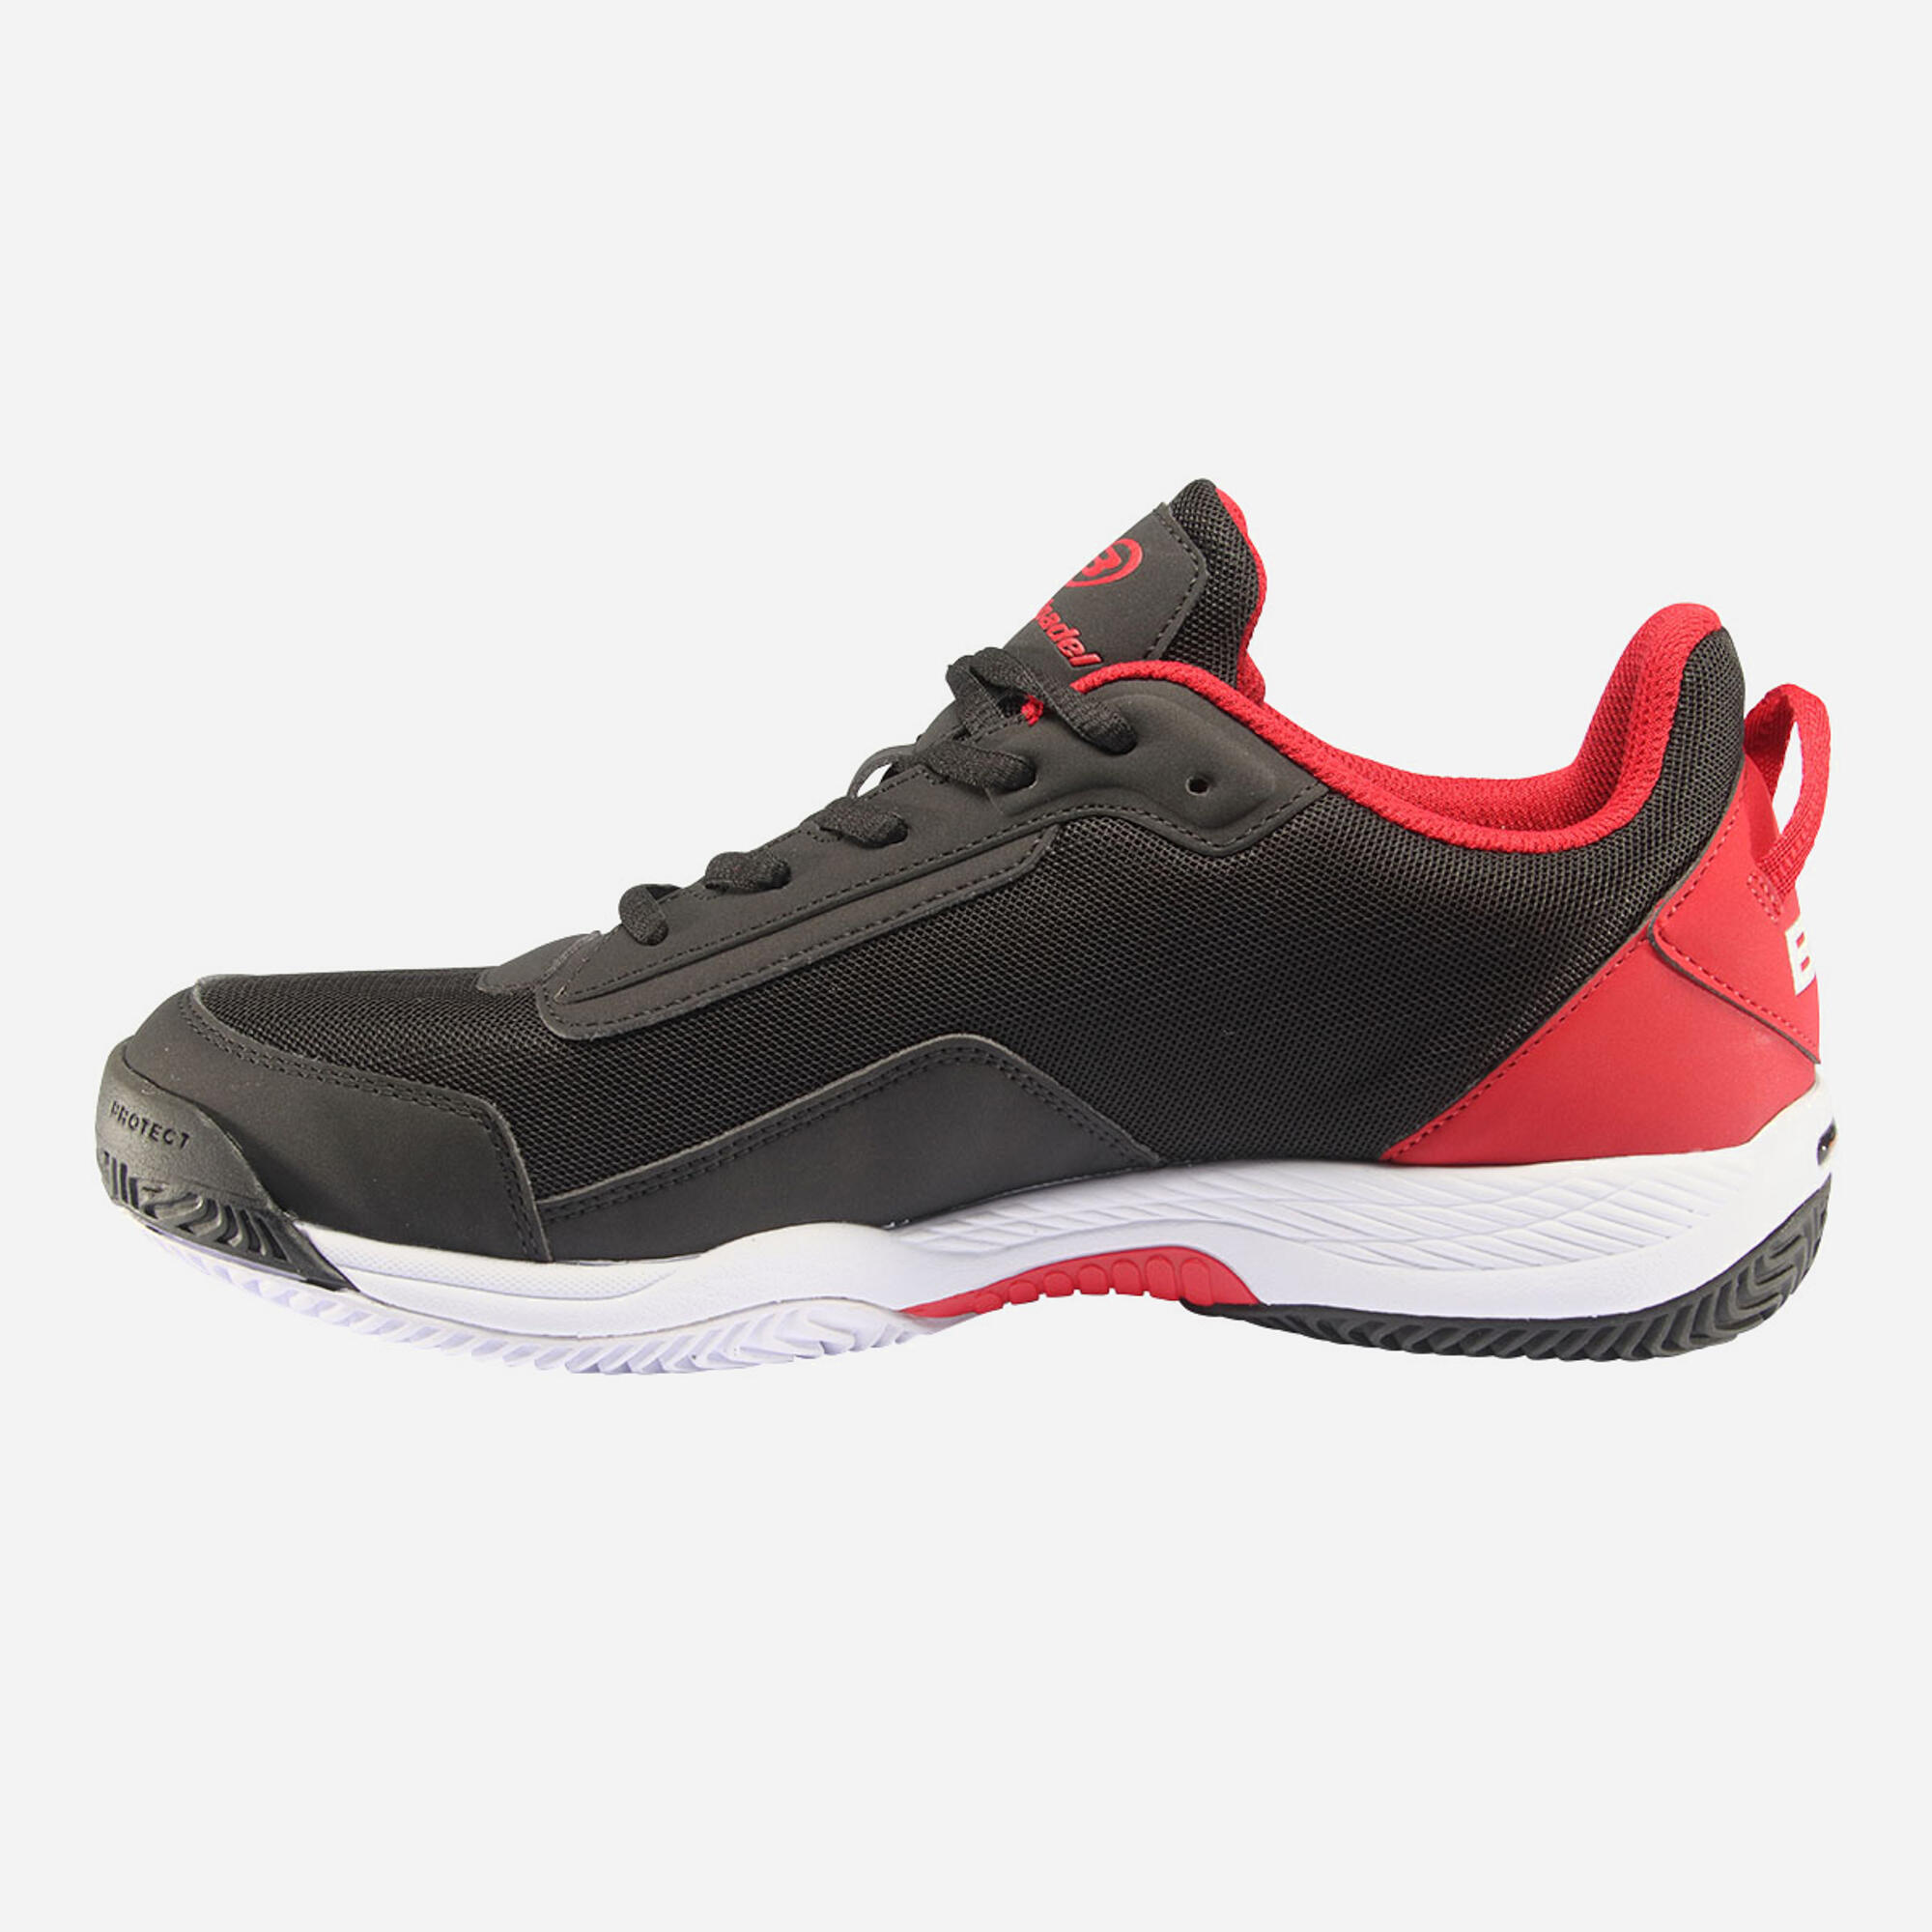 Men's Padel Shoes Bowi 23 - Black/Red 2/4